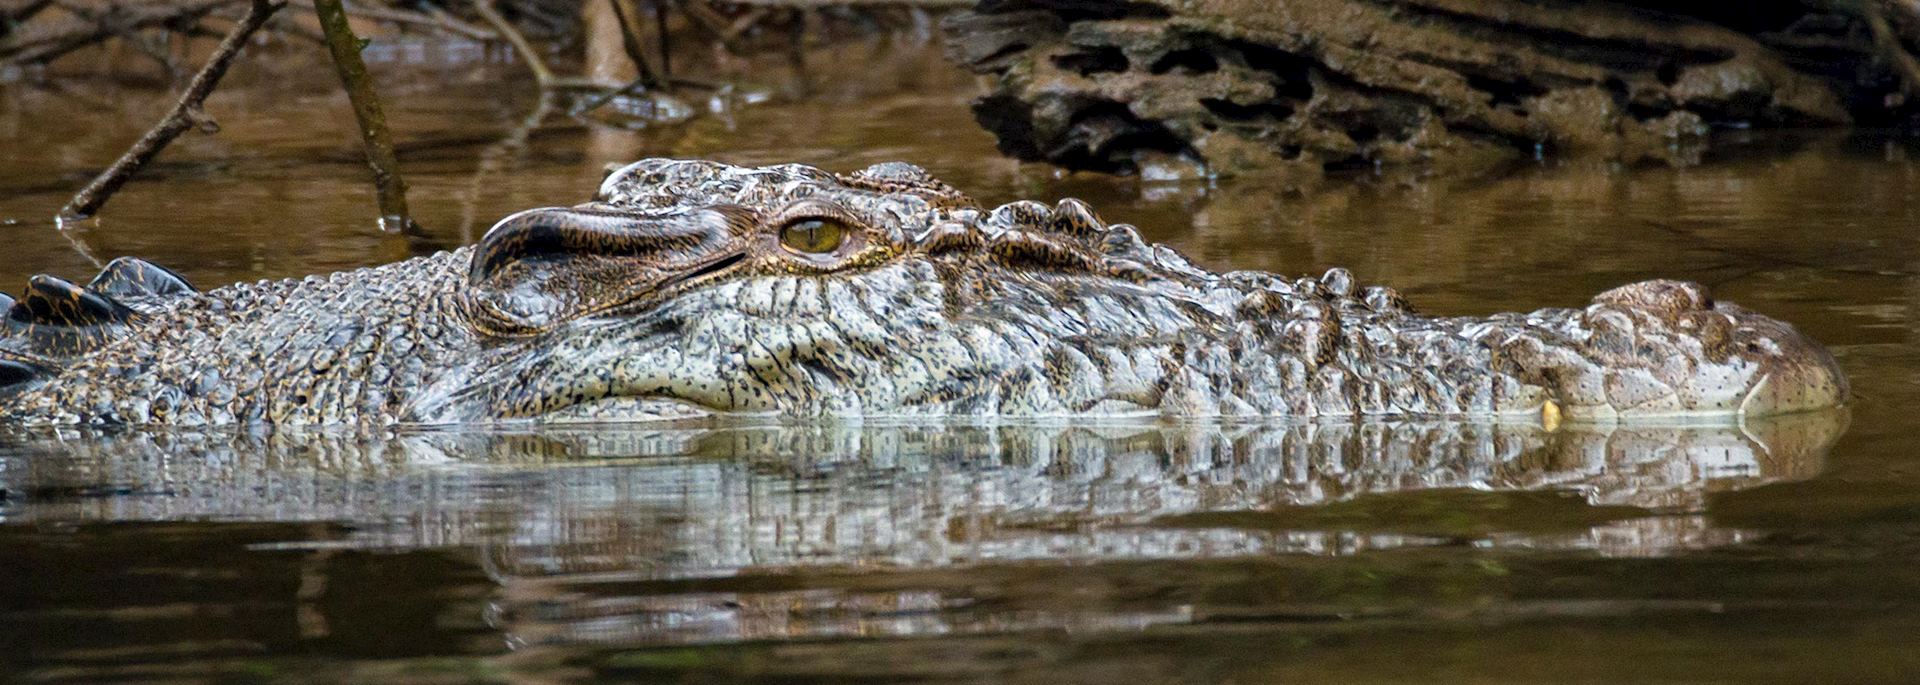 Saltwater crocodile, Daintree Rainforest